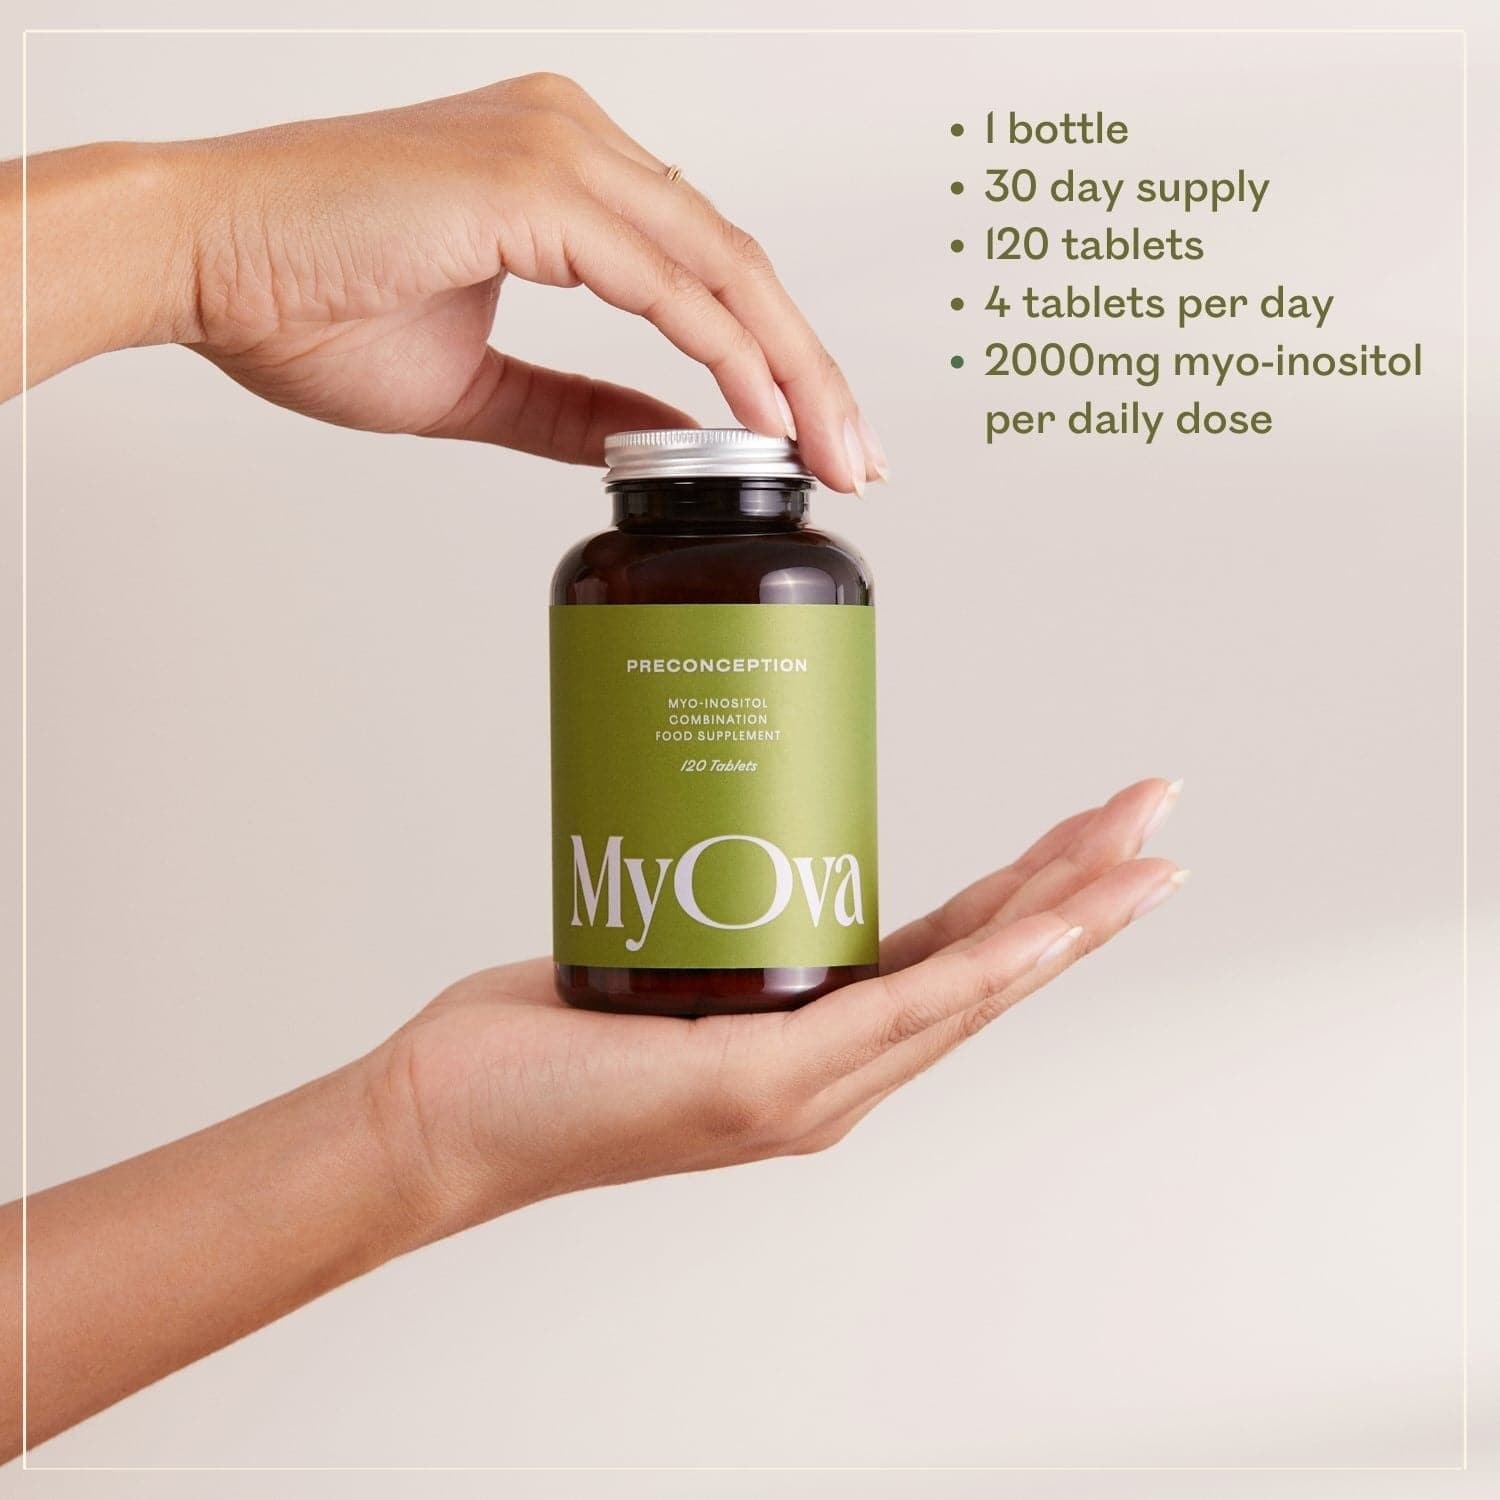 MyOva Fertility Supplement - 2000mg myo-inositol per daily dose & 120 tablets per bottle 